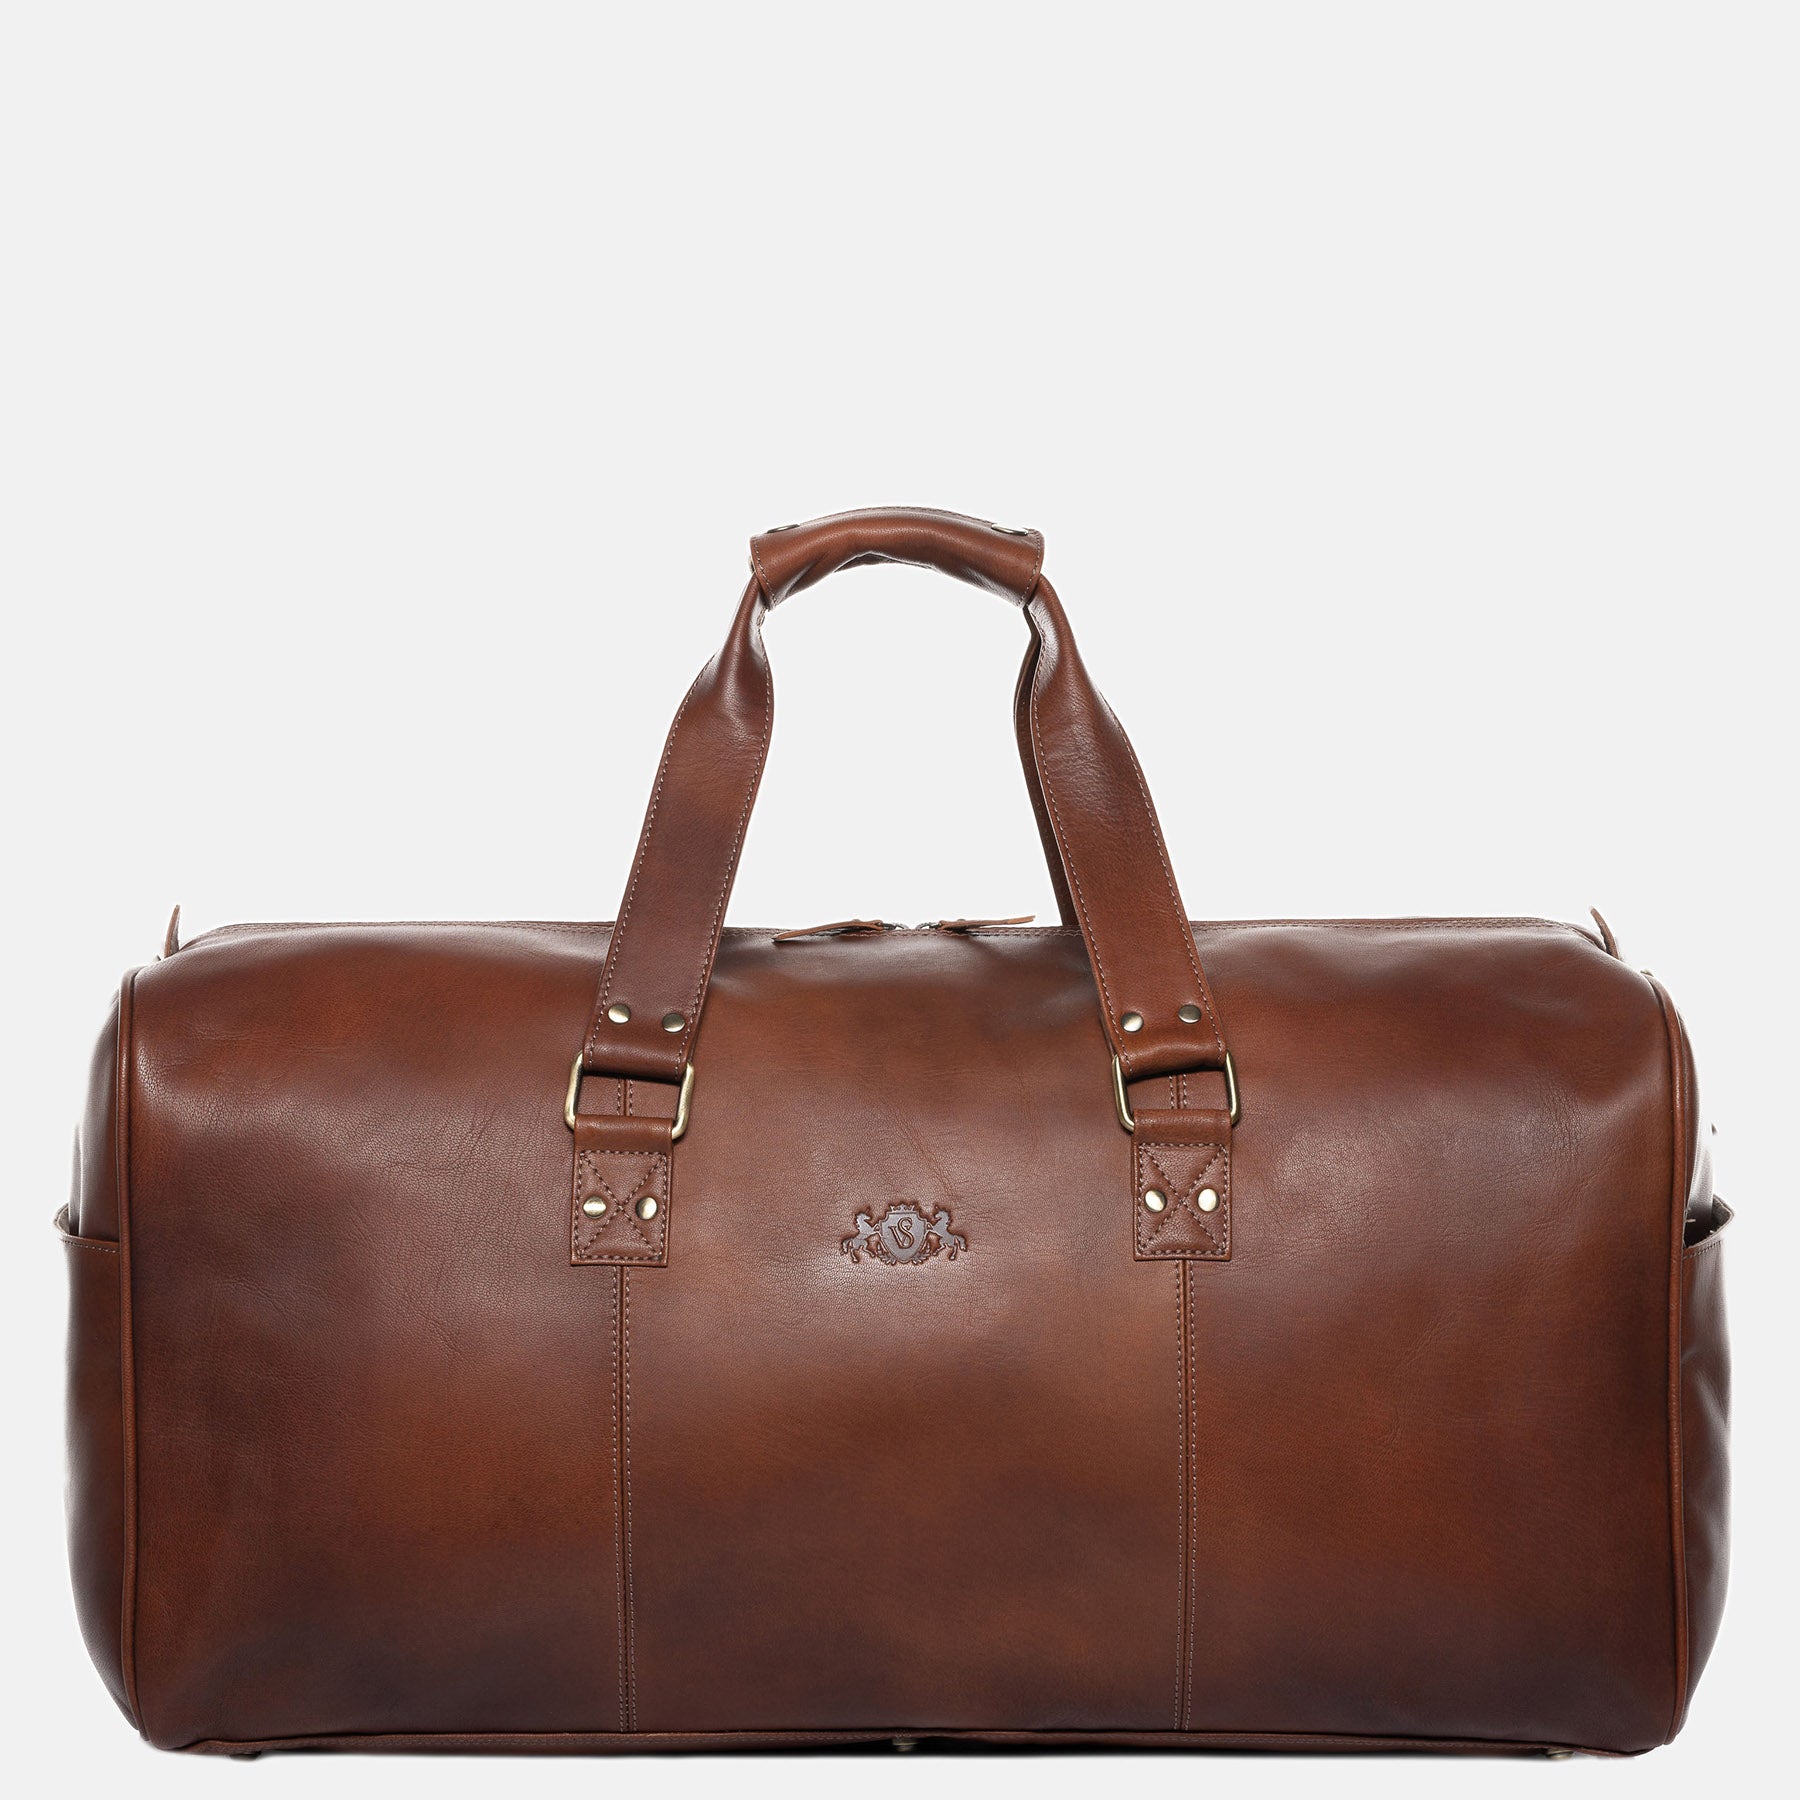 XL Travel bag LINUS smooth leather light brown